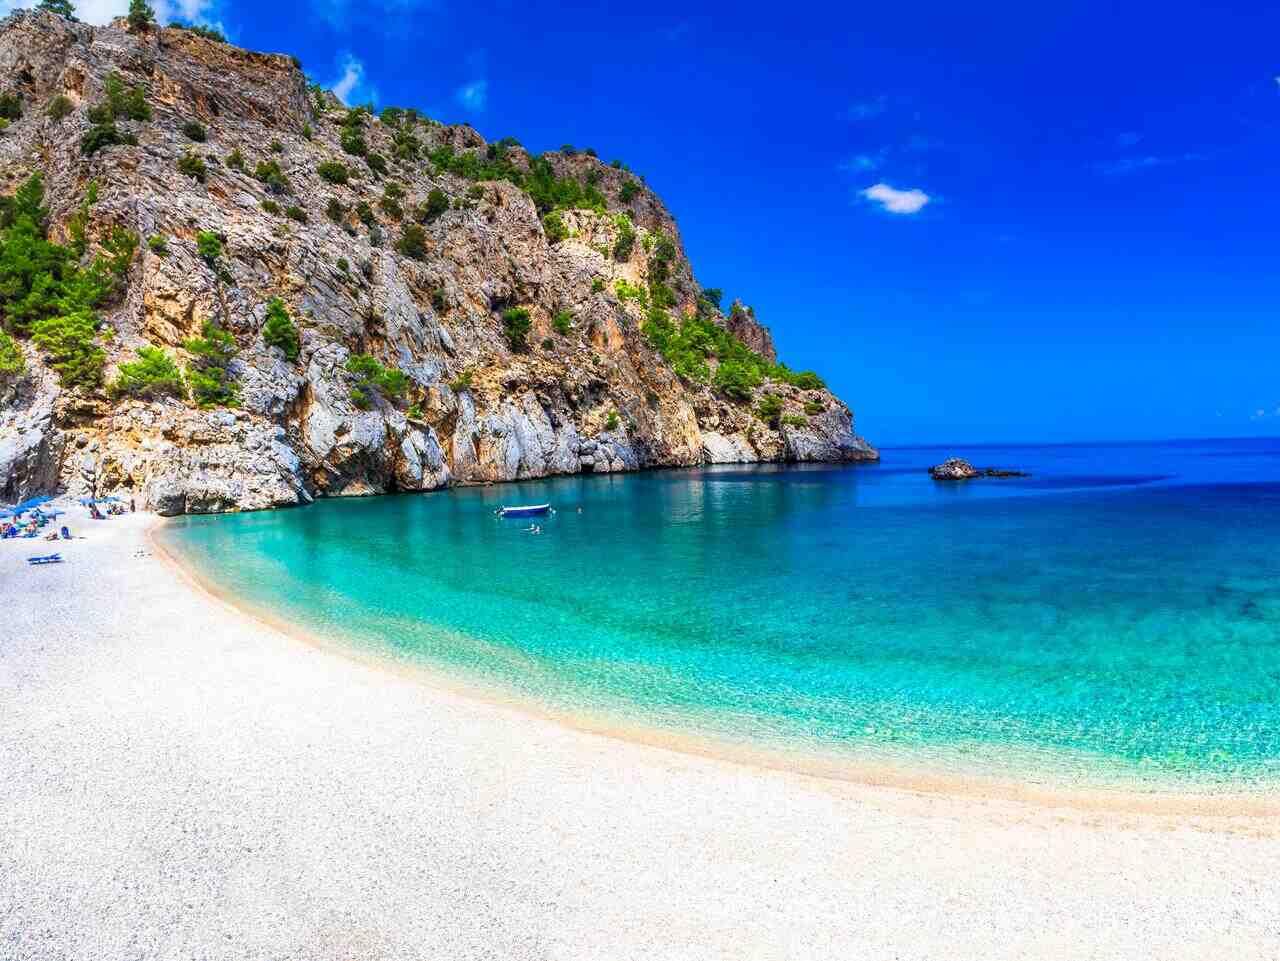 Resim galerisi 3: En güzel kumsallara sahip Yunan Adası hangisidir?